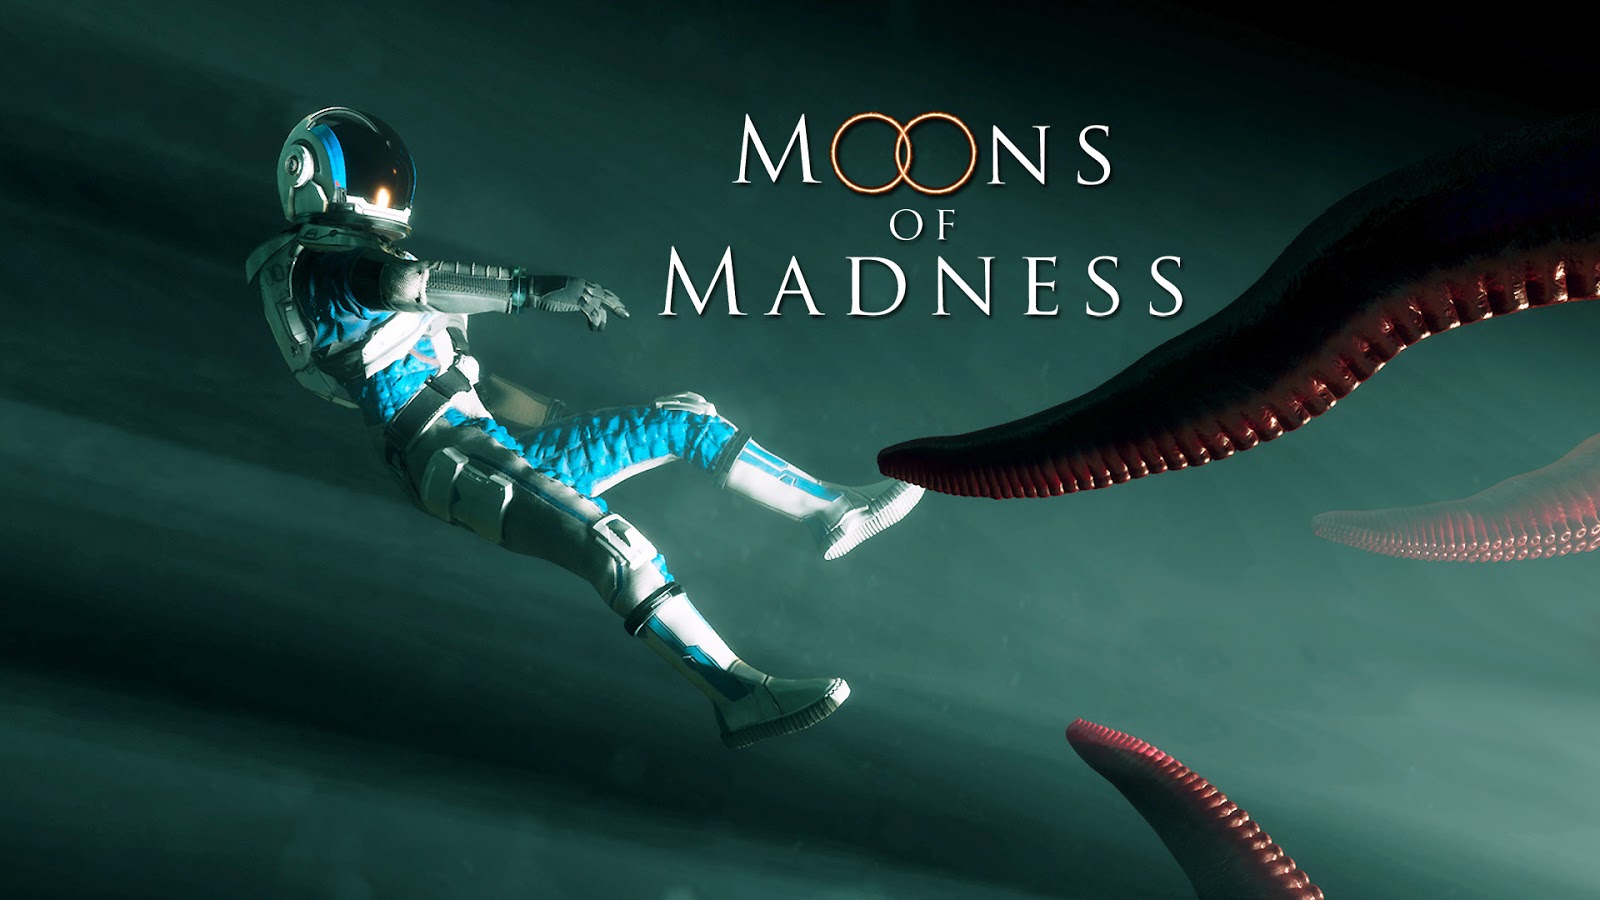 Moon madness steam фото 104